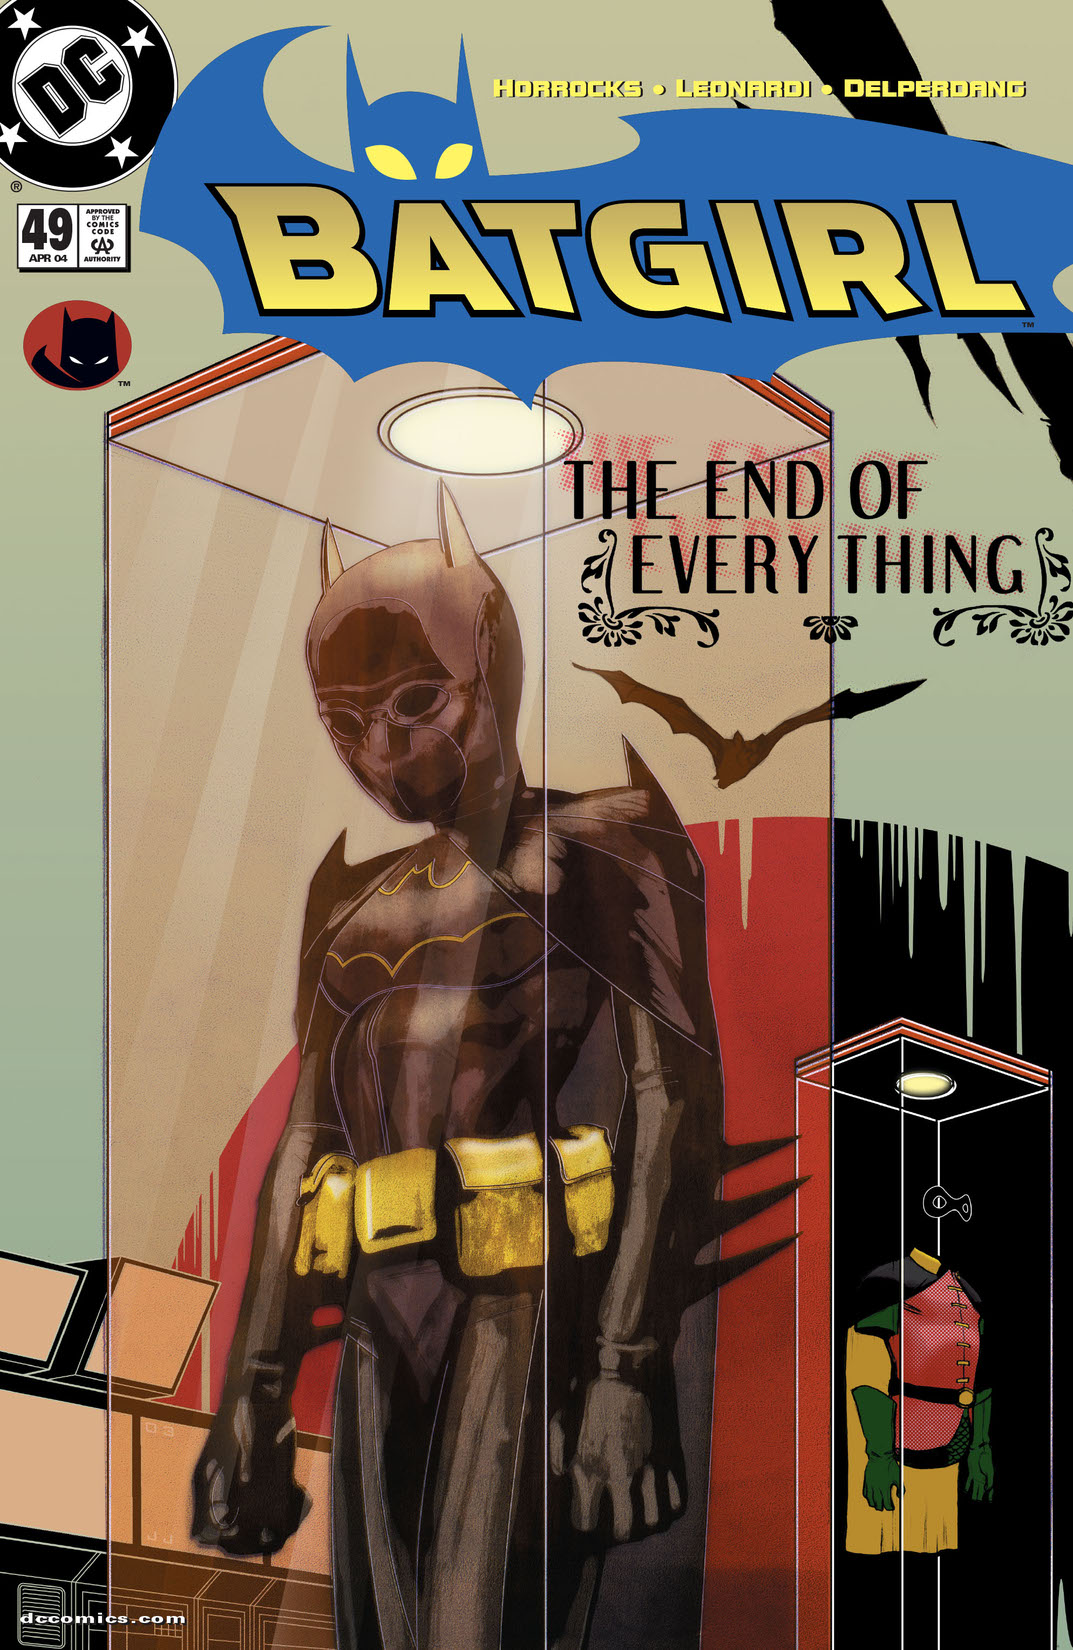 Batgirl (2000-) #49 preview images